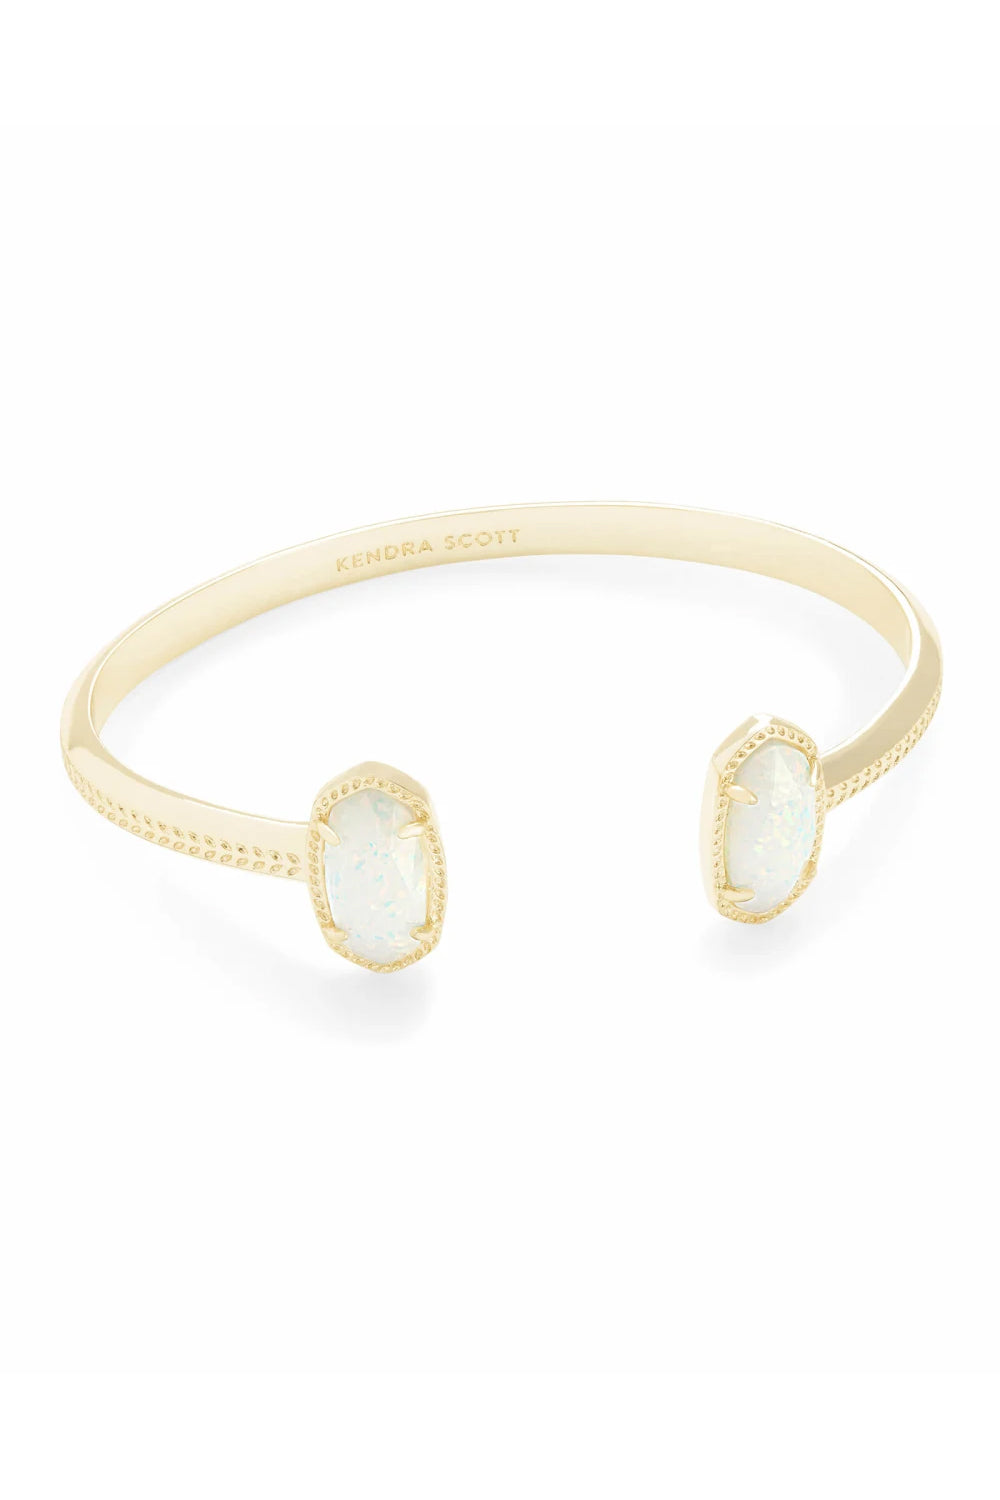 Kendra Scott: Elton Gold Cuff Bracelet - White Kyocera Opal | Makk Fashions